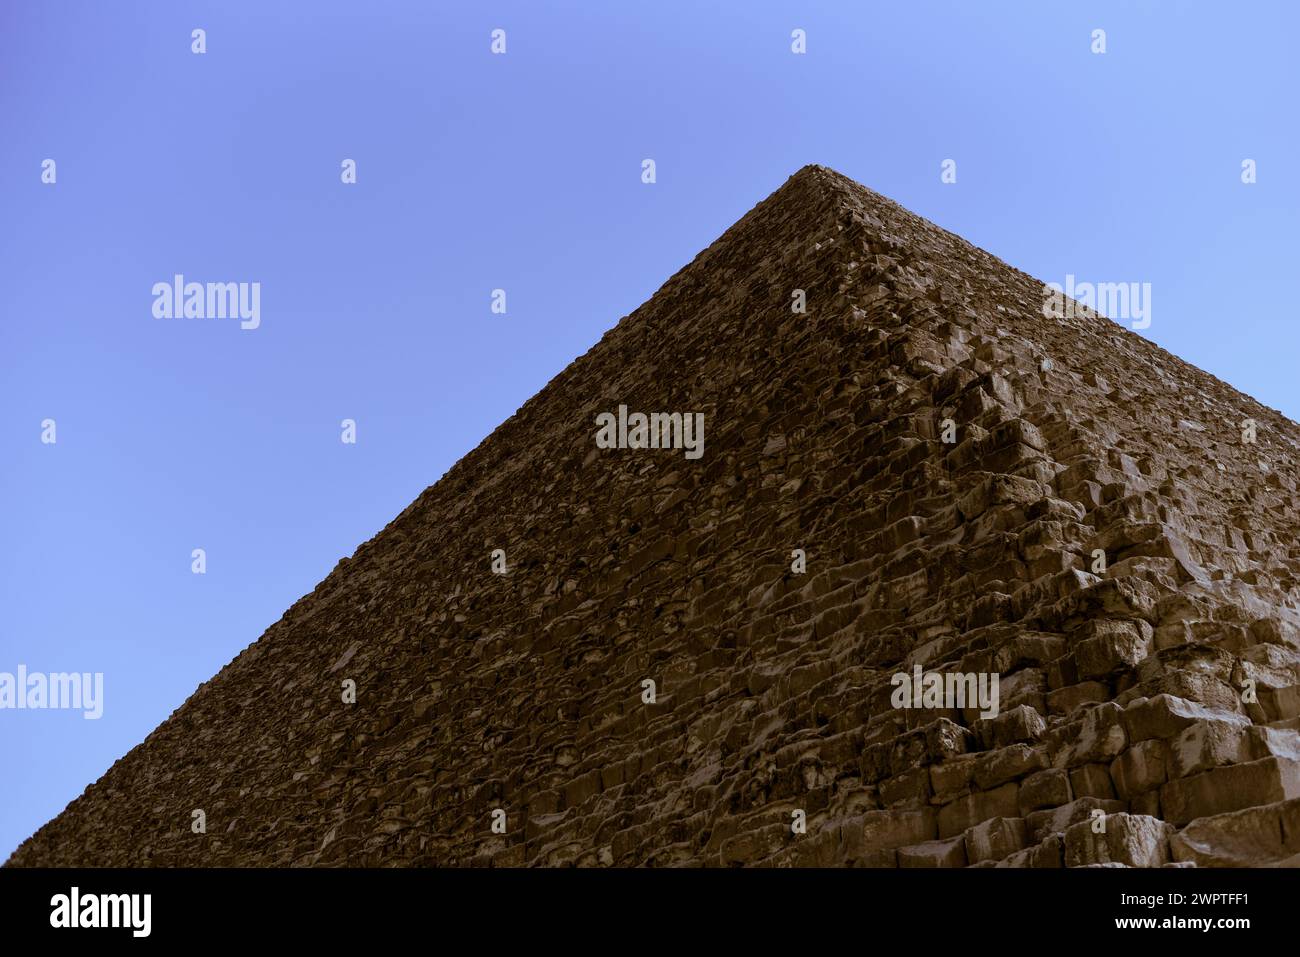 The pyramid complex of Giza, Egypt Stock Photo